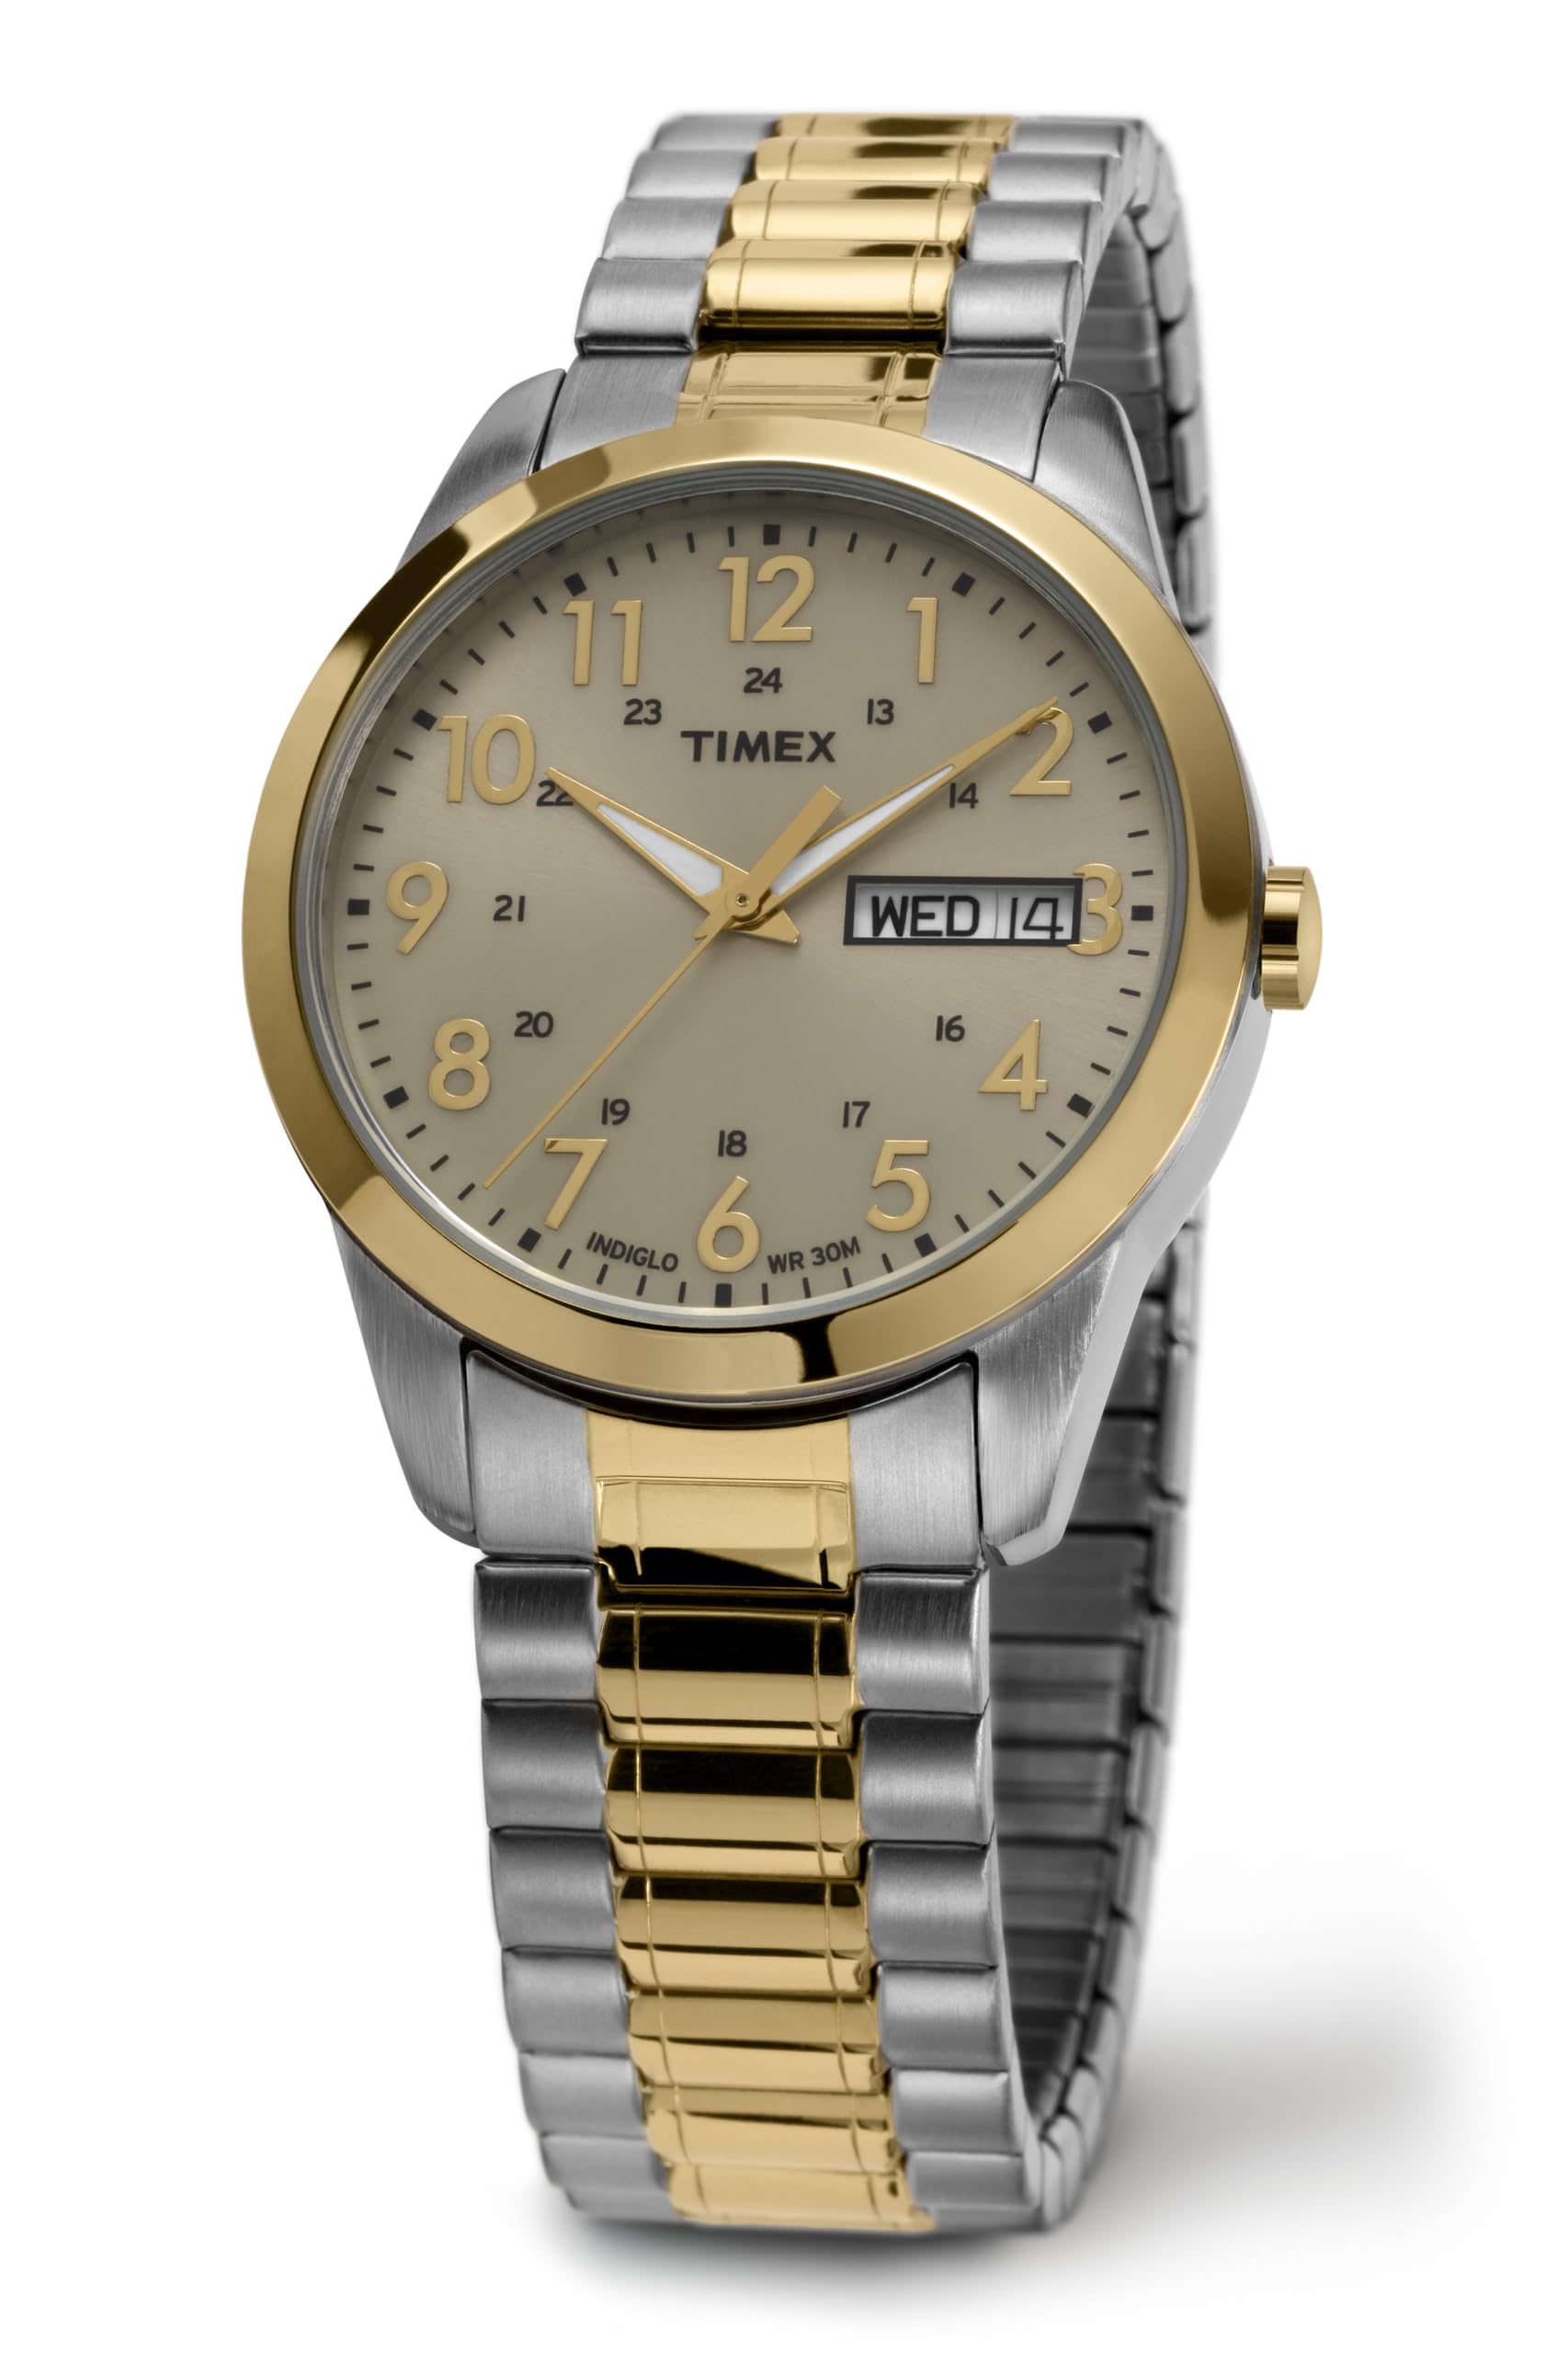 Timex Men's South Street Sport Watch